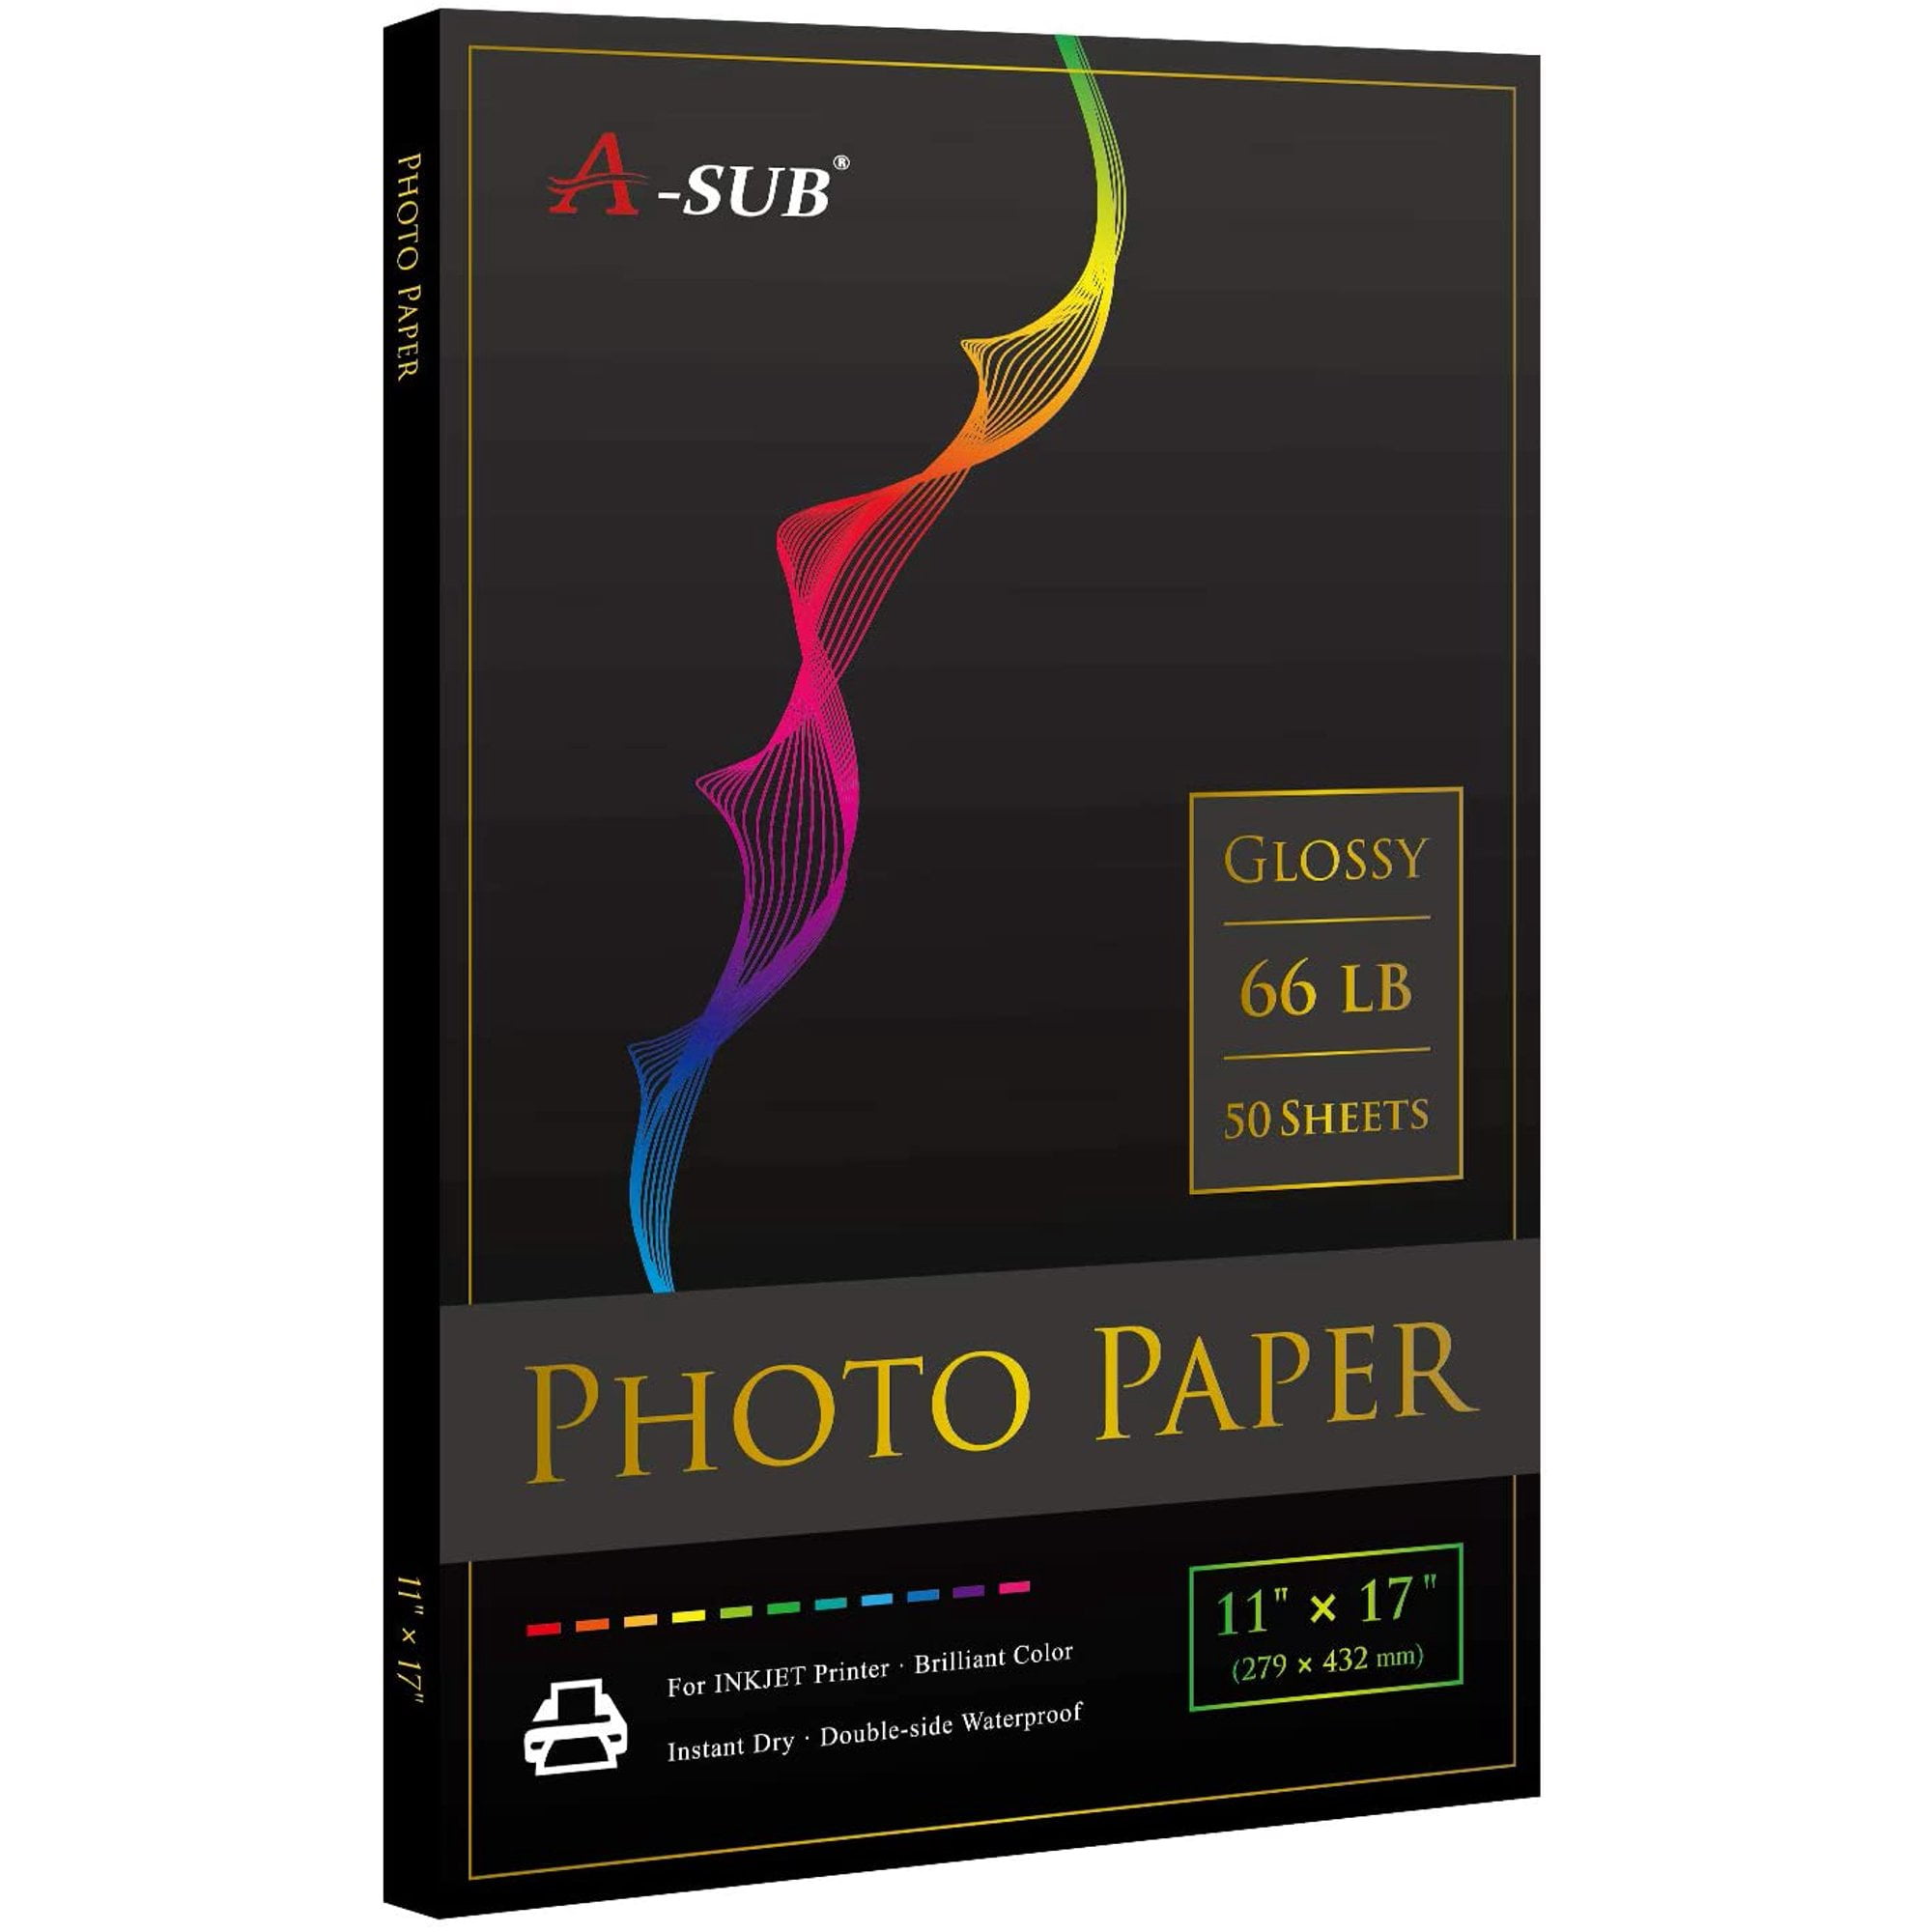 Inkjet Printer Photo Paper from $1.79